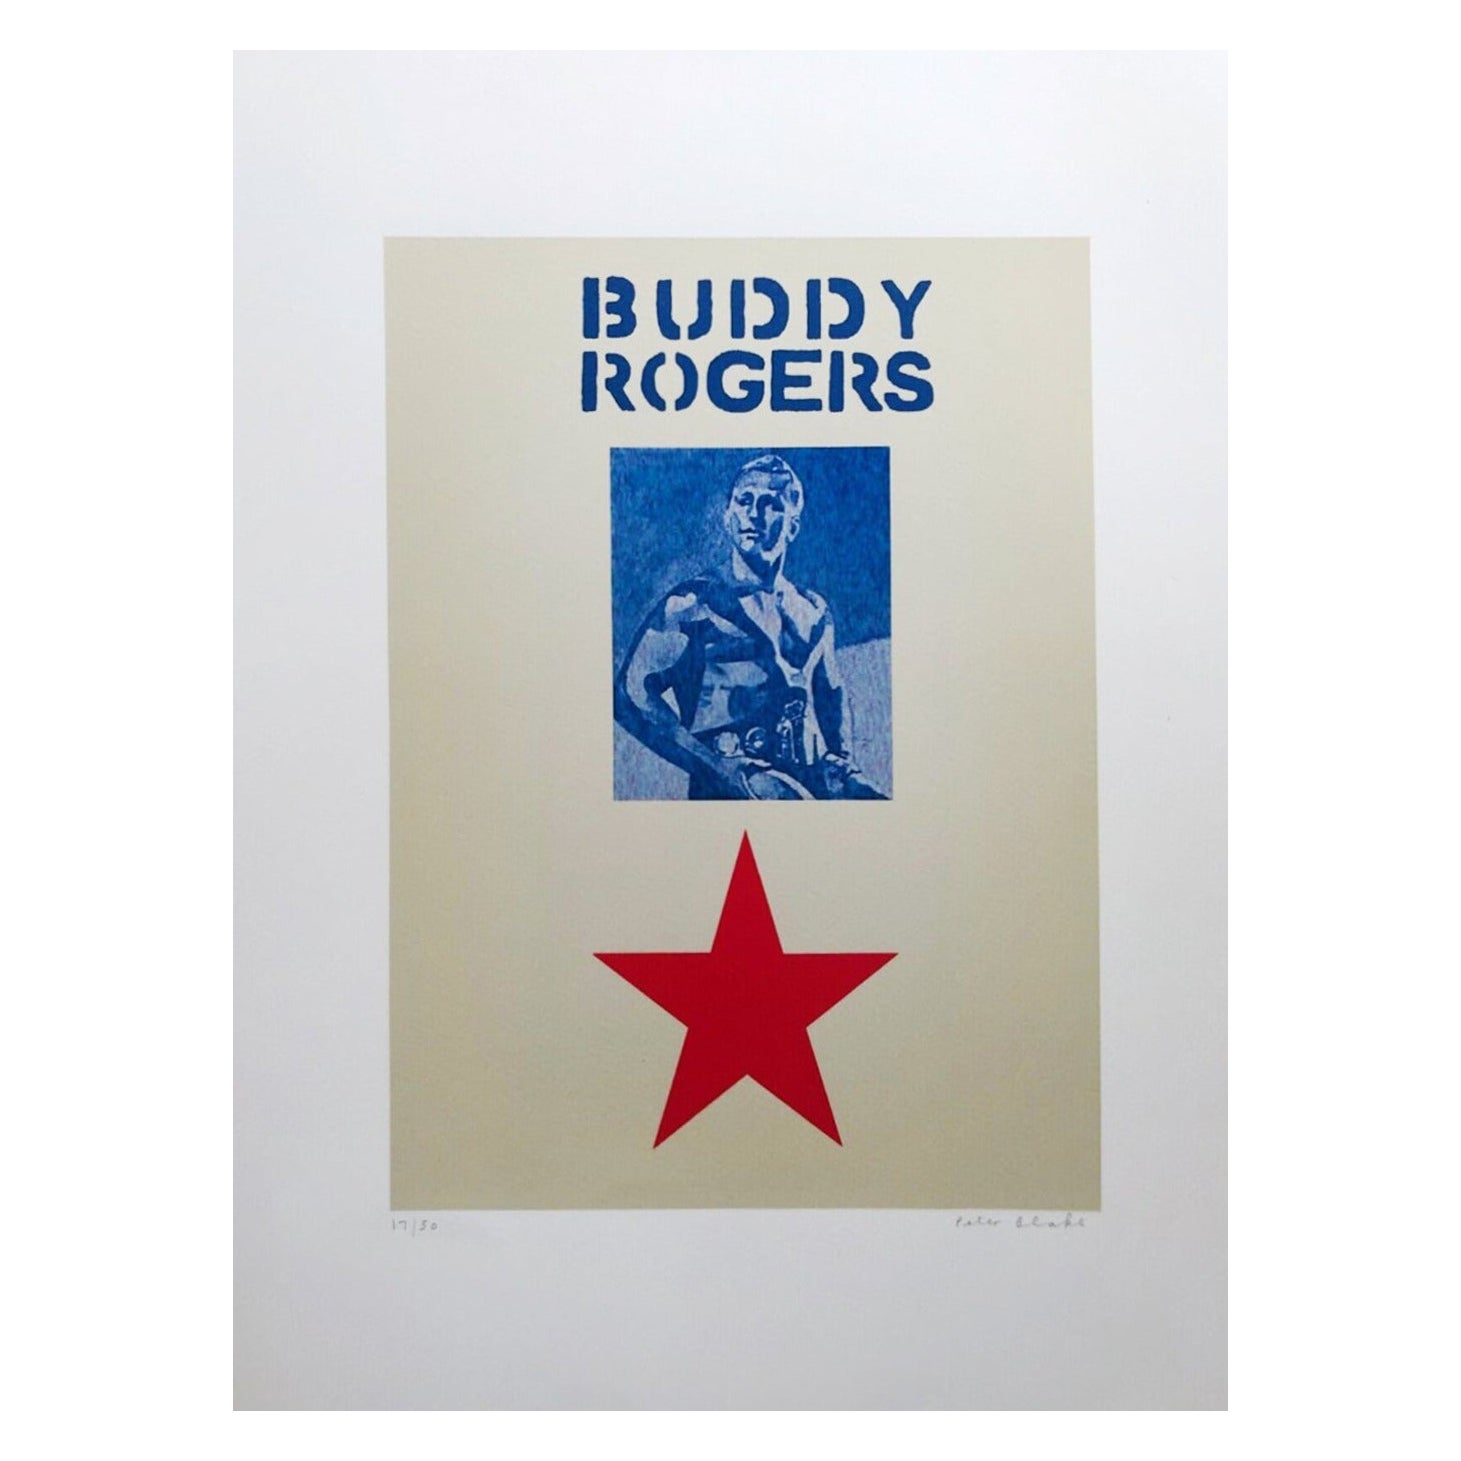 2003 Peter Blake - Buddy Rogers - Motiv 10 Original signierter Kunstdruck